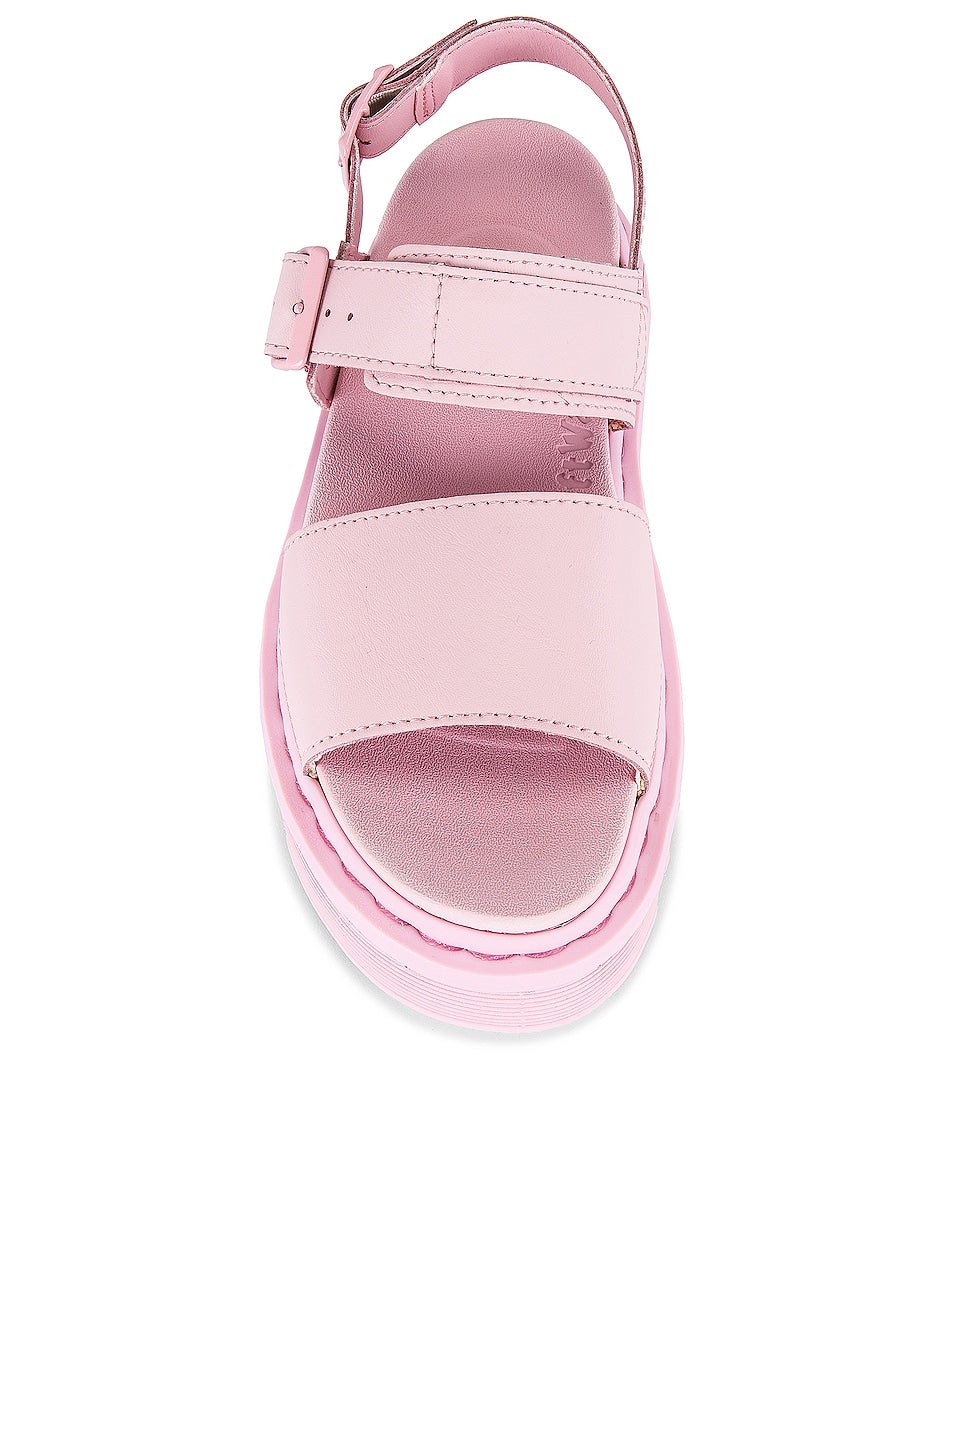 Dr. Martens Voss Mono Sandal in Chalk Pink WOMEN'S SIZE 9